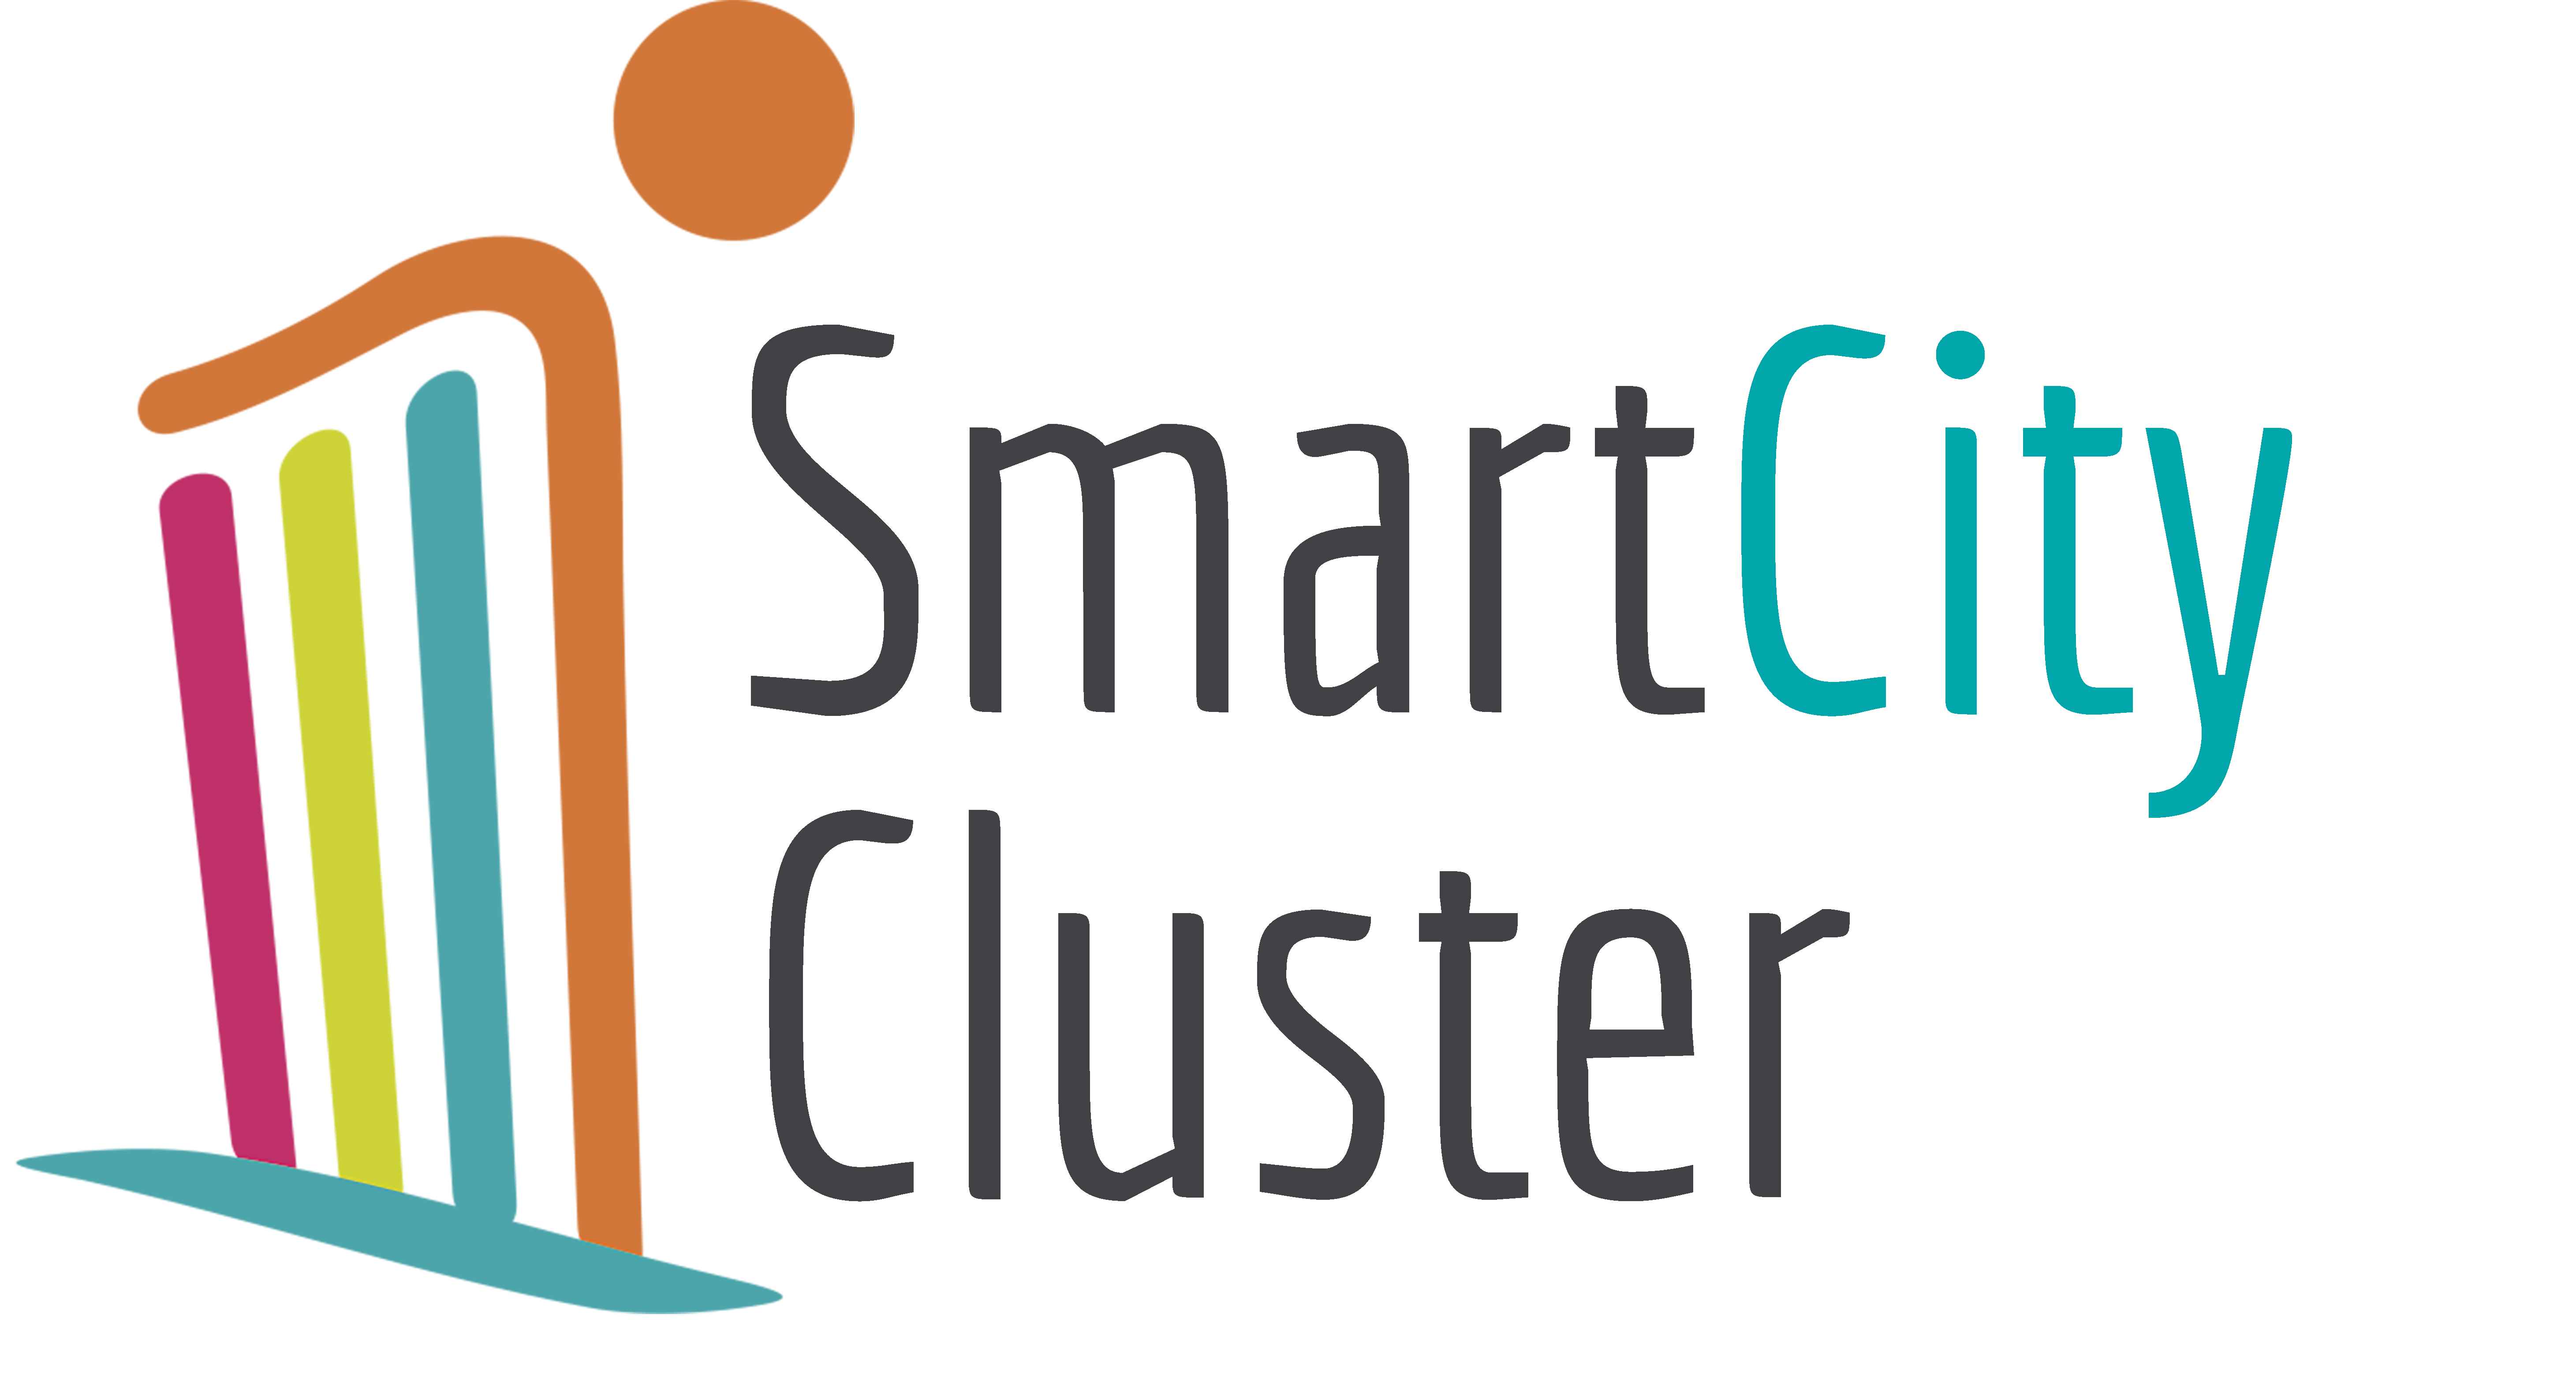 Smart City Cluster